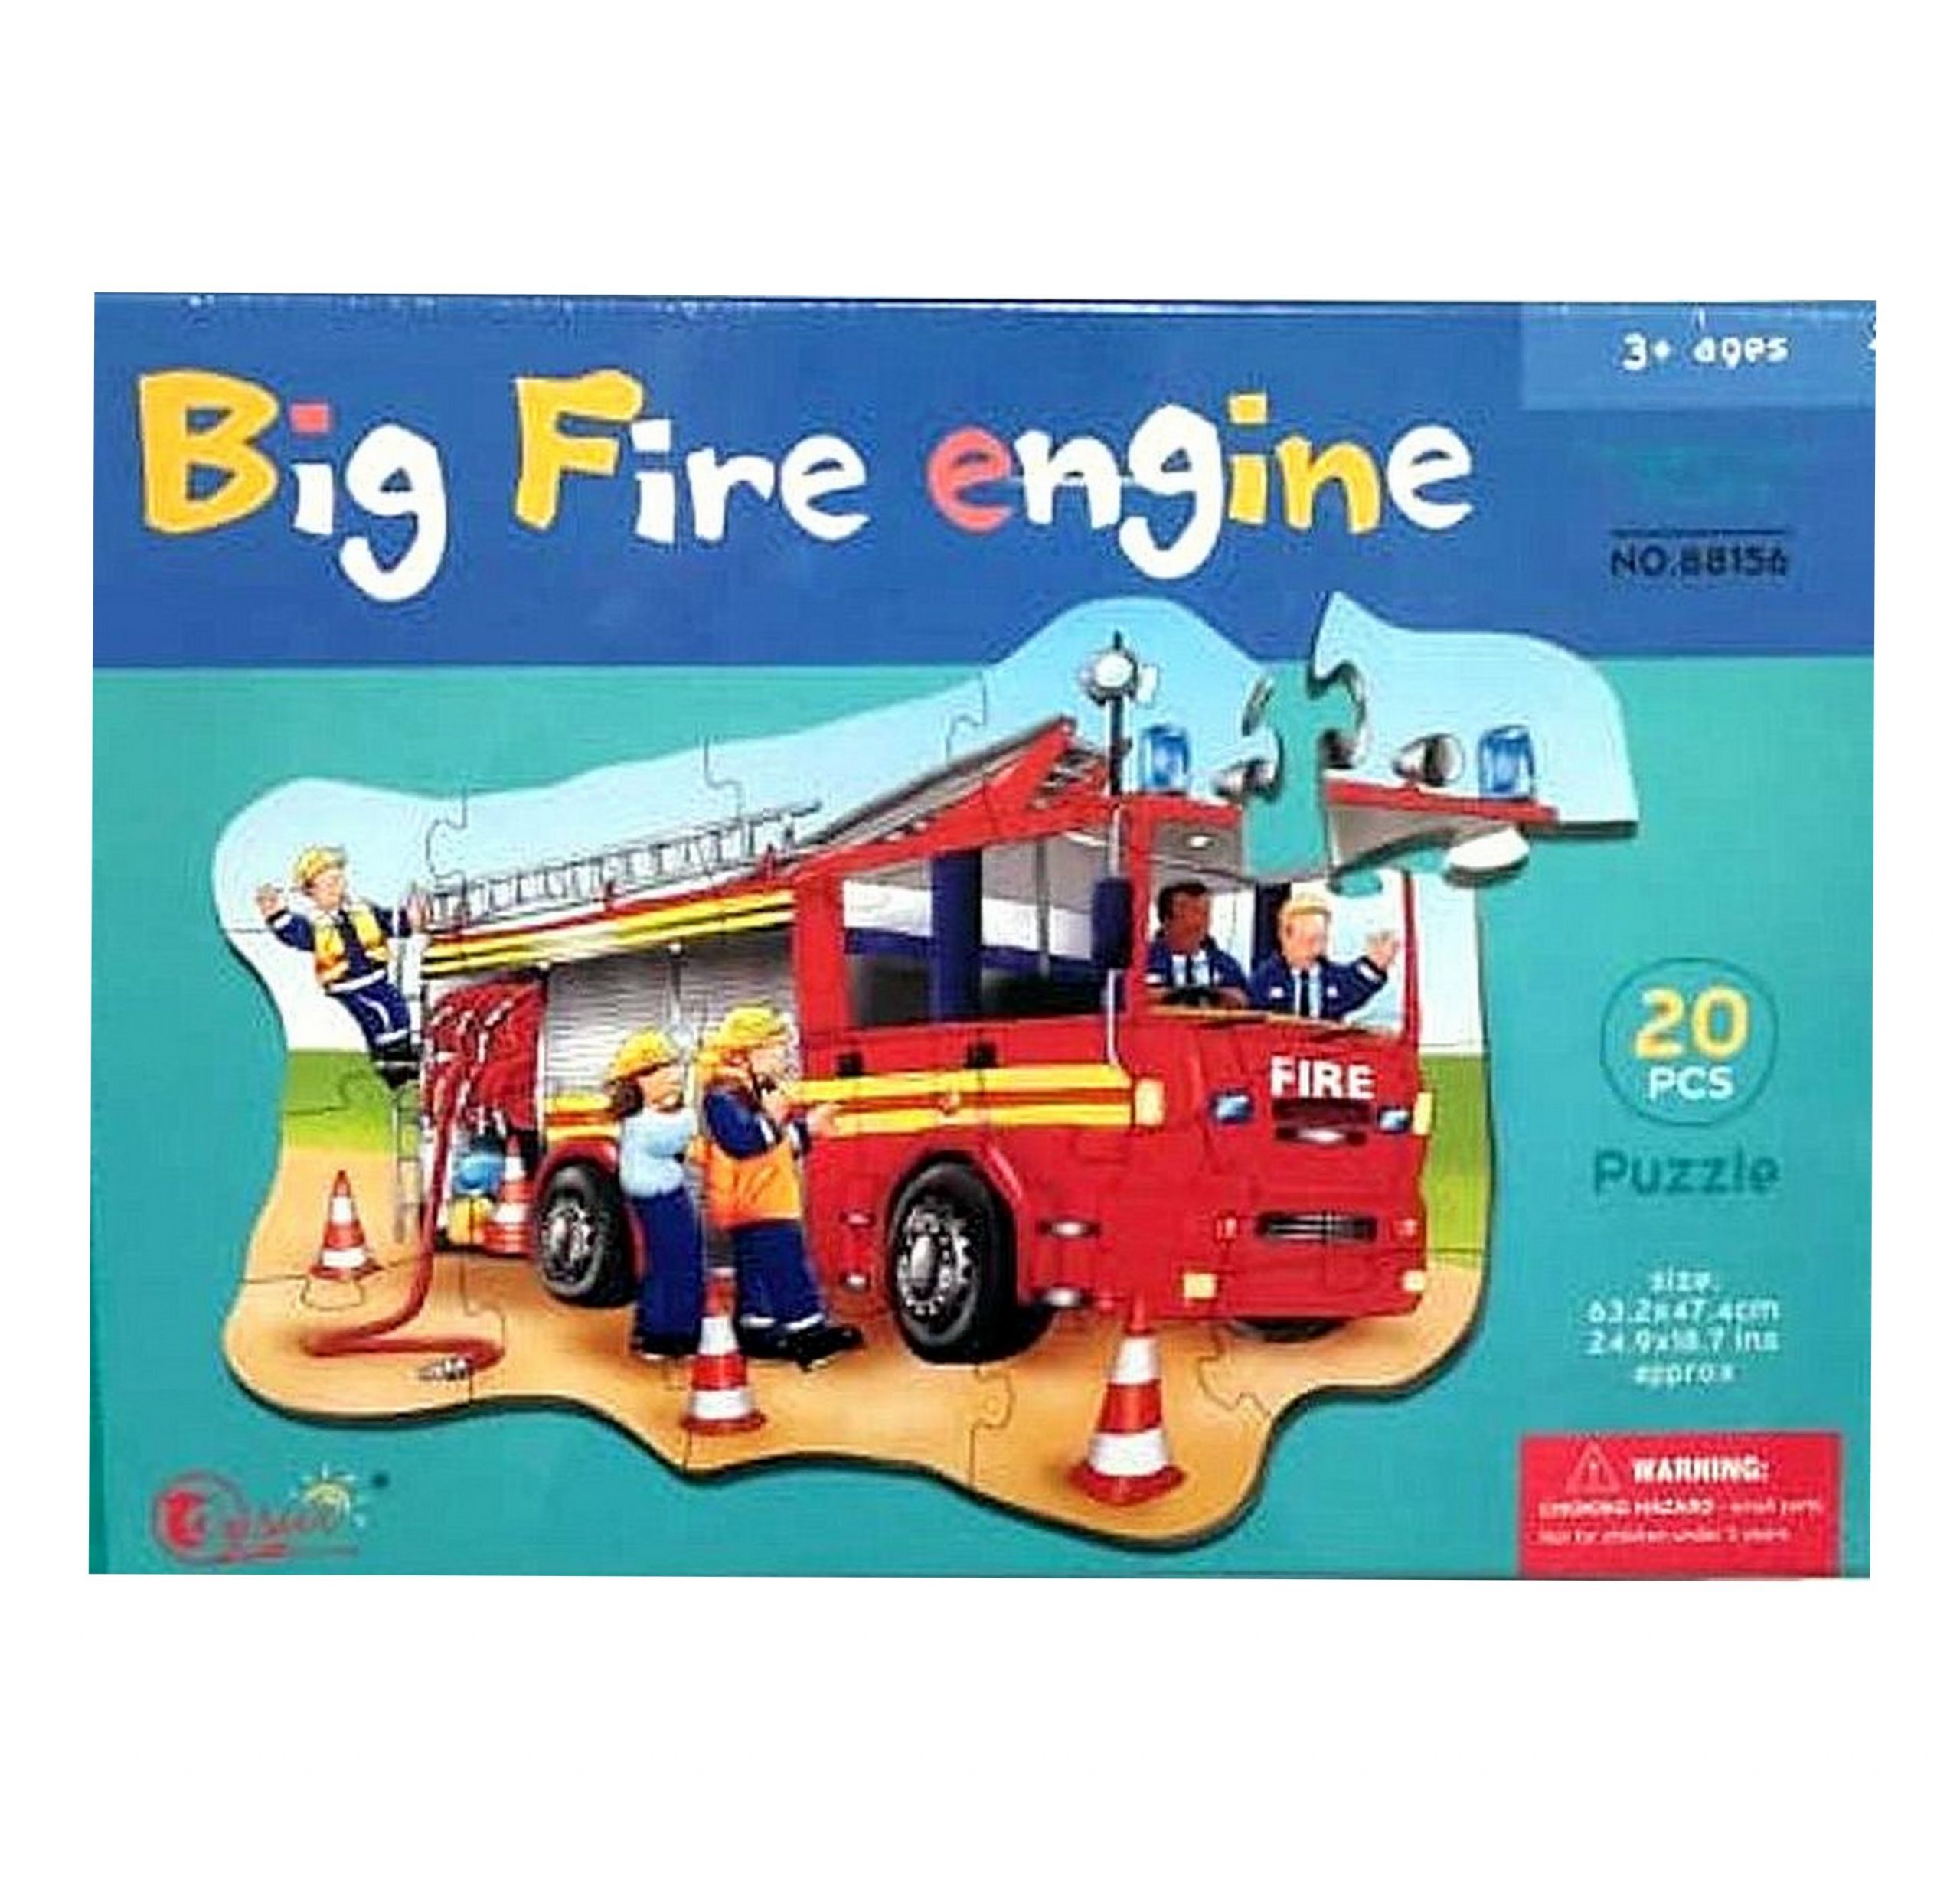 Puzzle Big fire engine - Μεγάλο πυροσβεστικό όχημα 20pcs